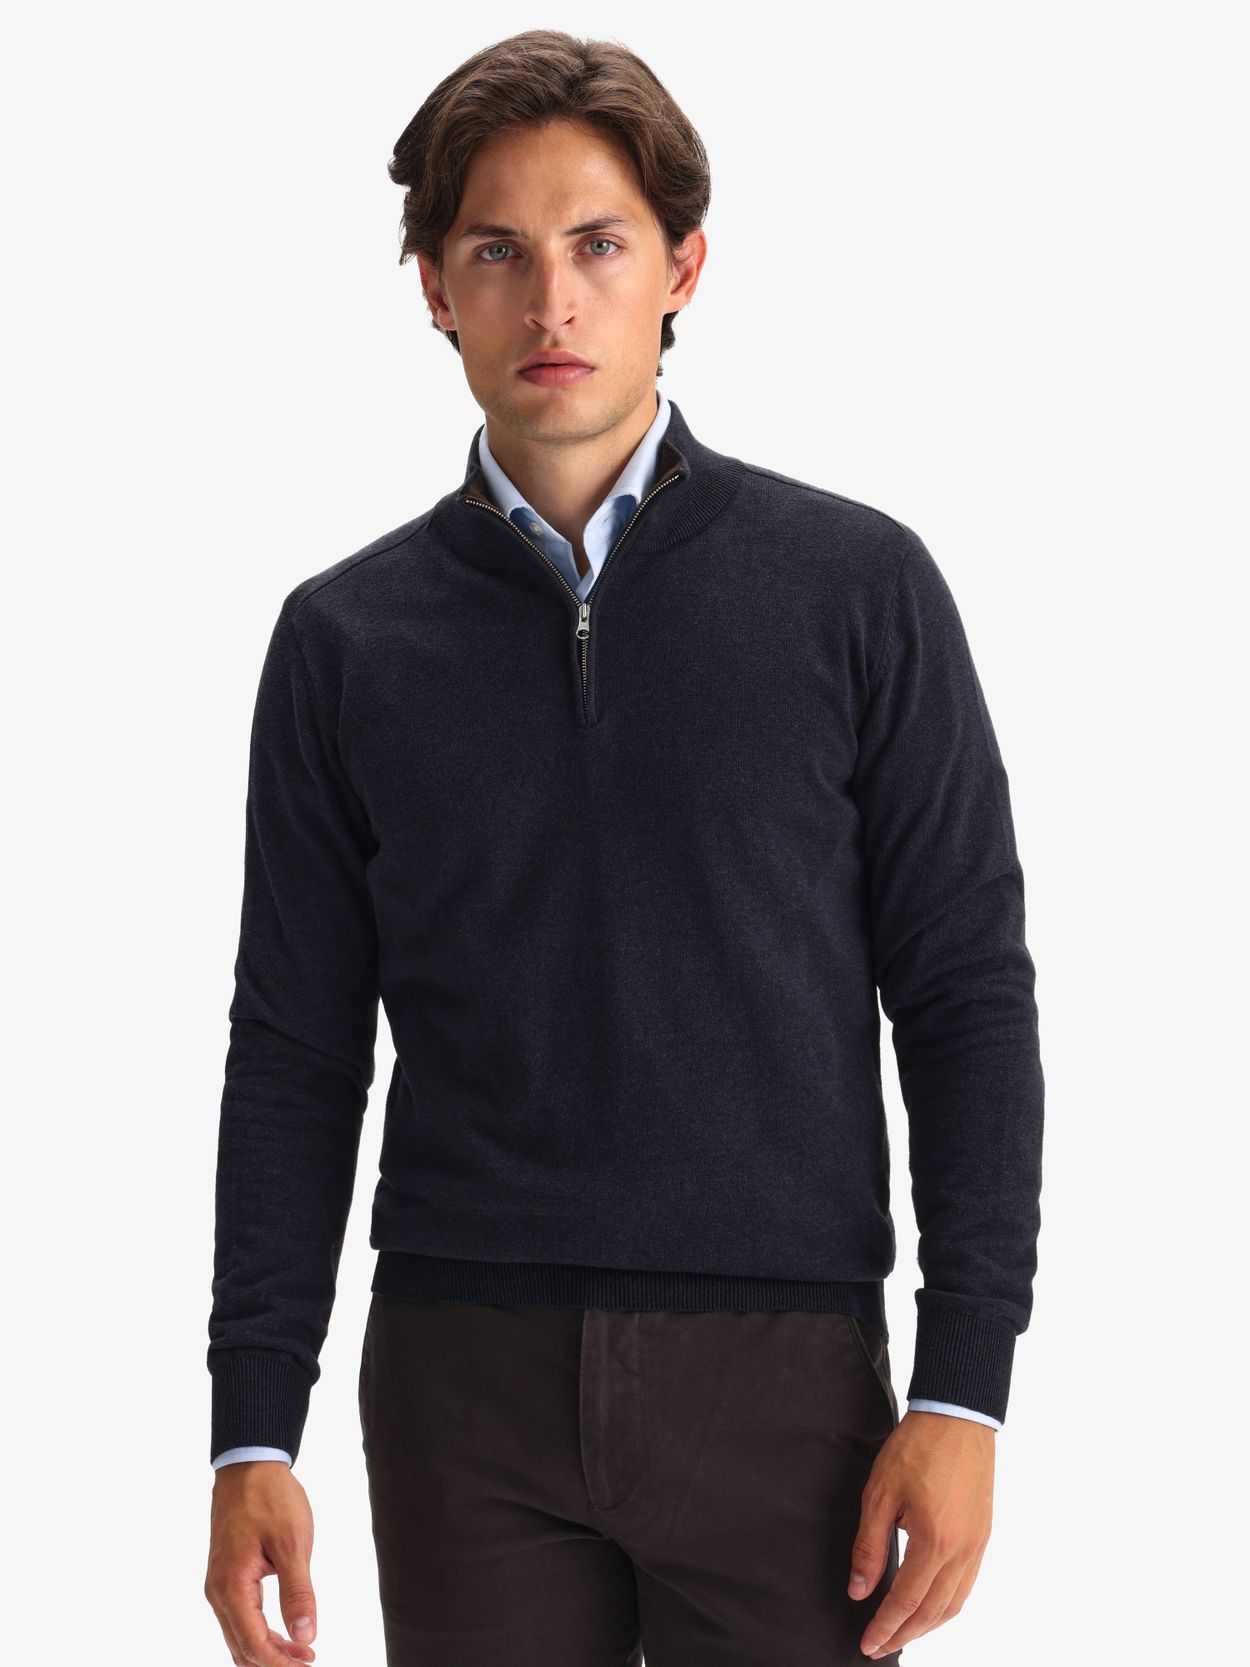 Blue Zipper Sweater